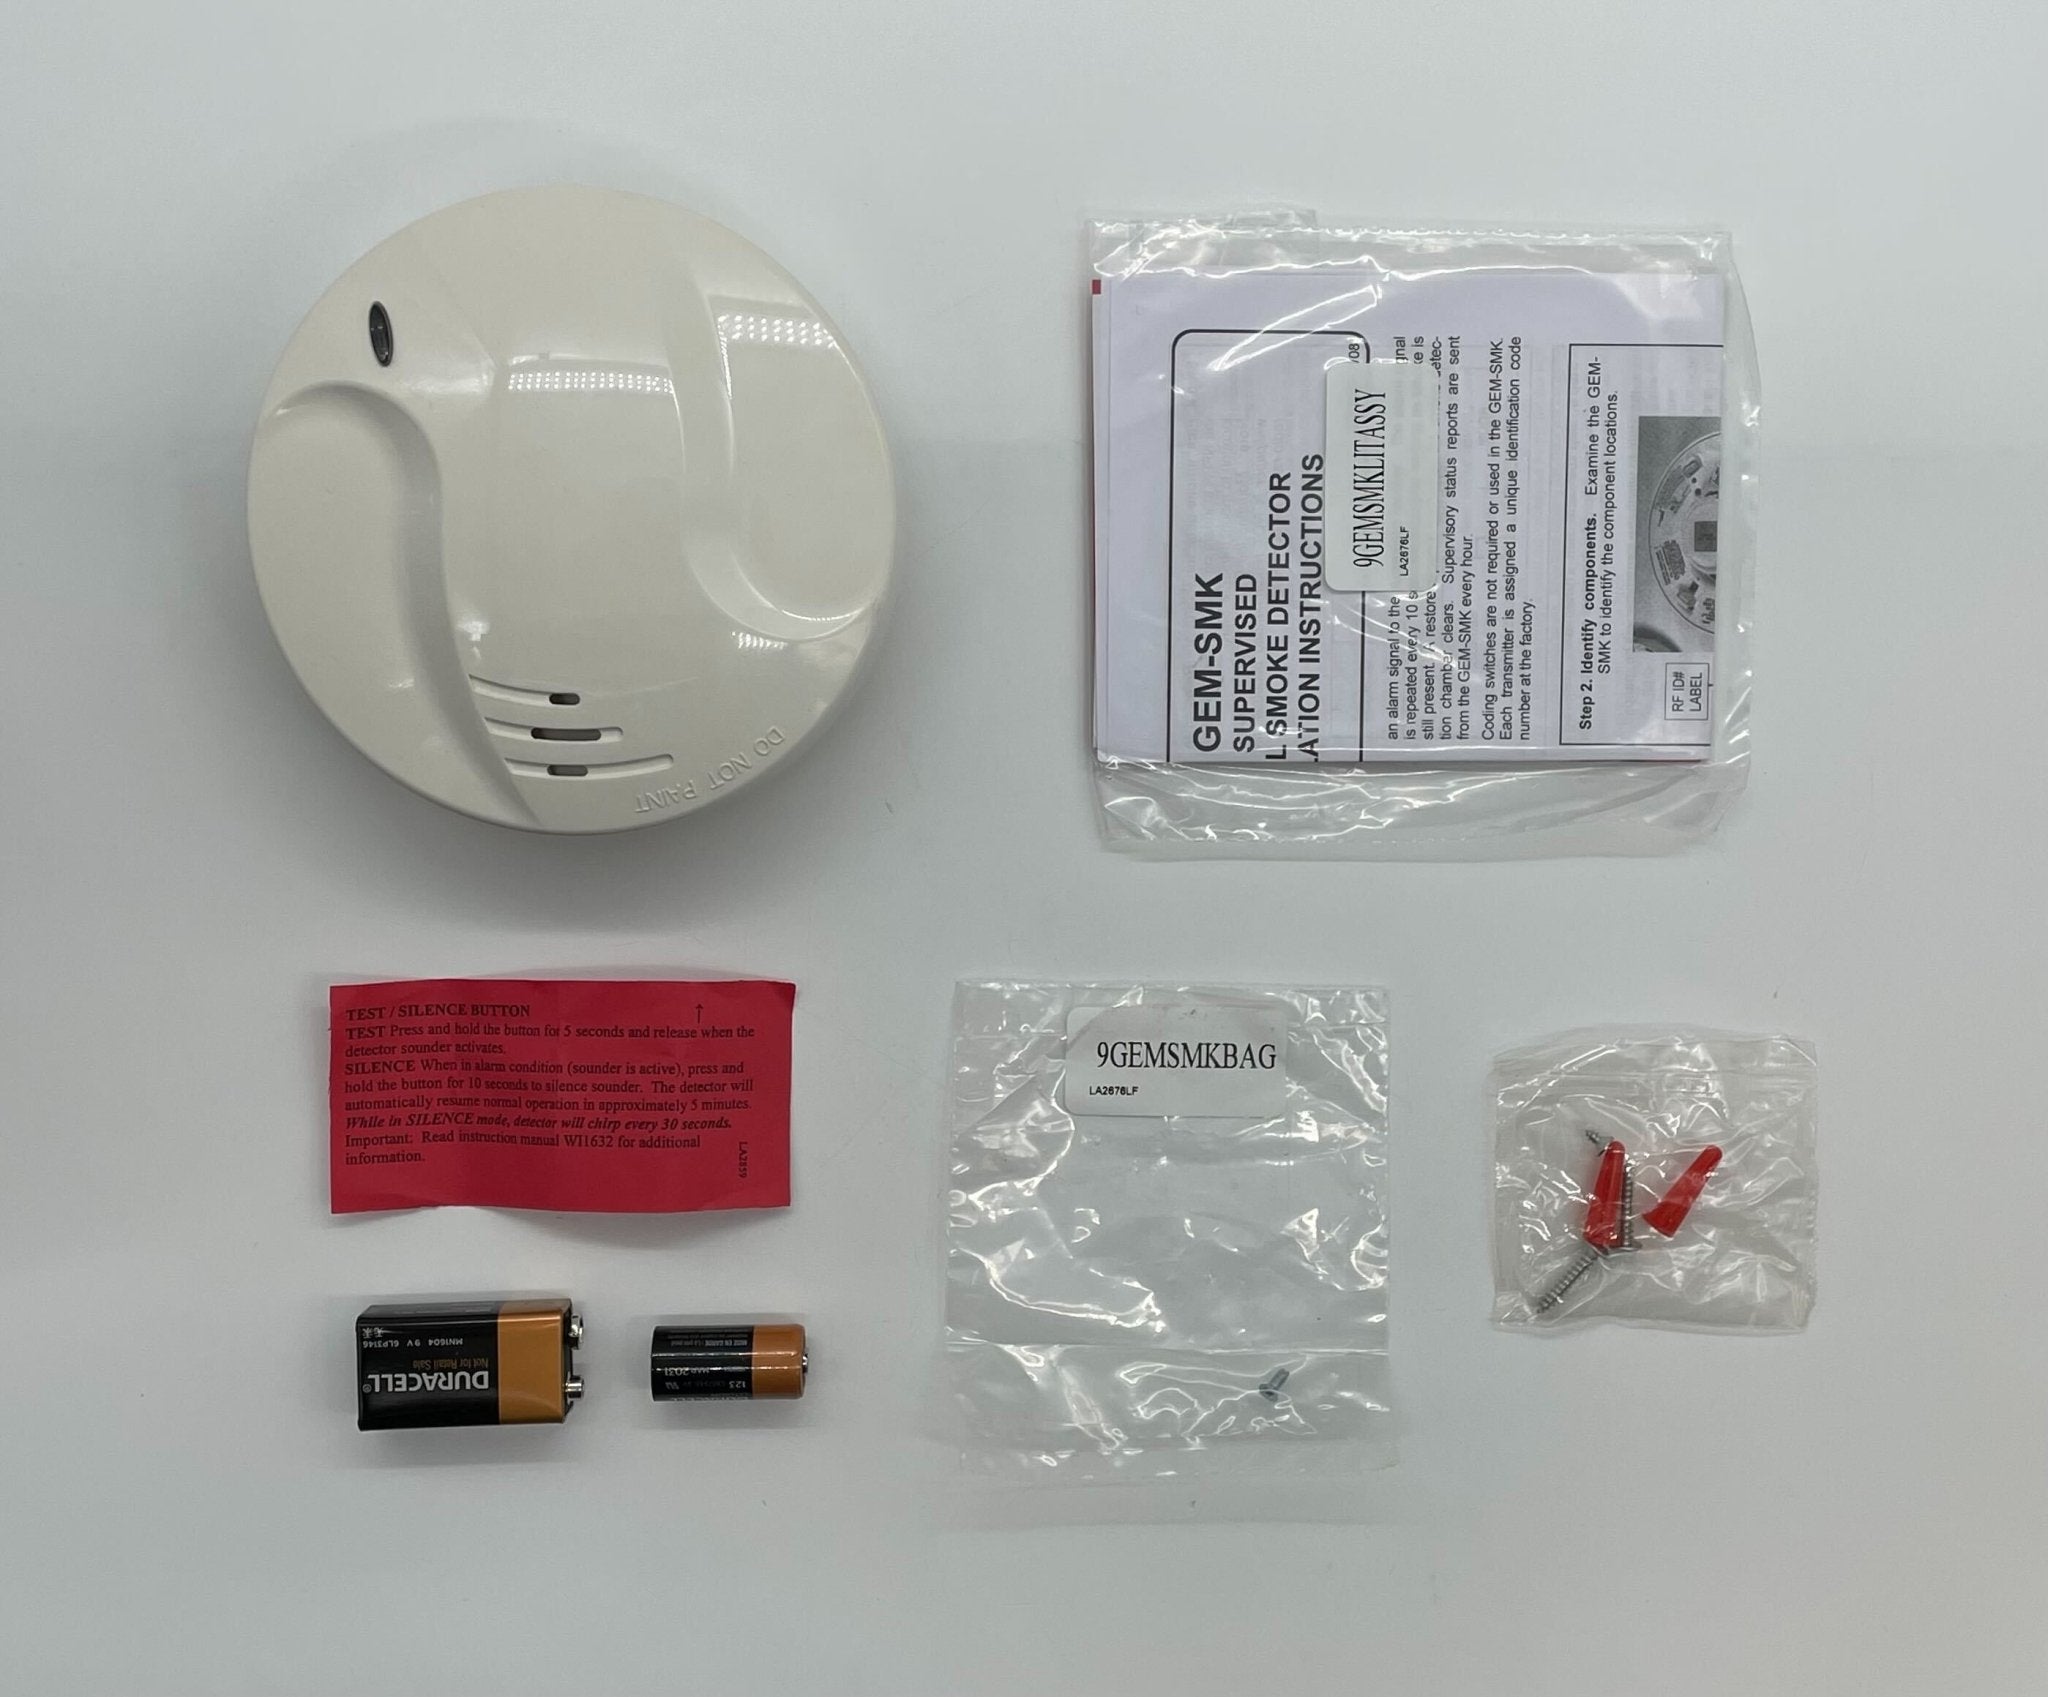 Napco GEM-SMK - The Fire Alarm Supplier